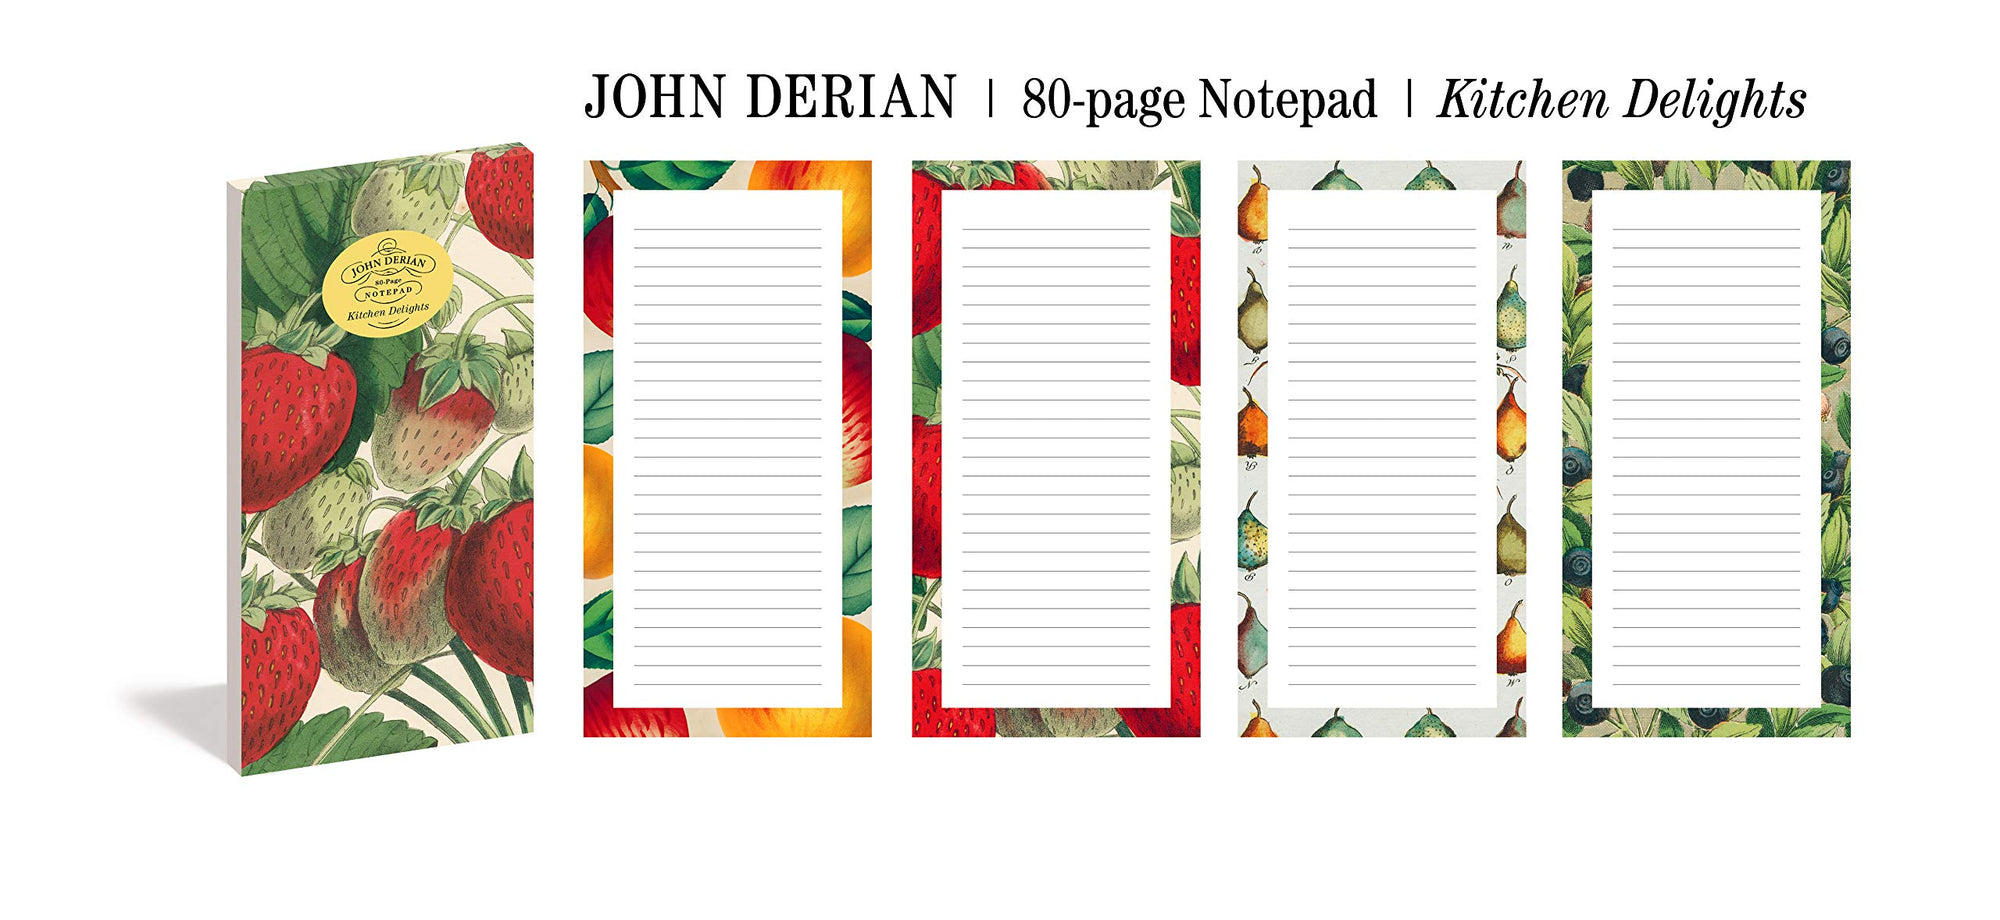 John Derian: Kitchen Delights Notepad